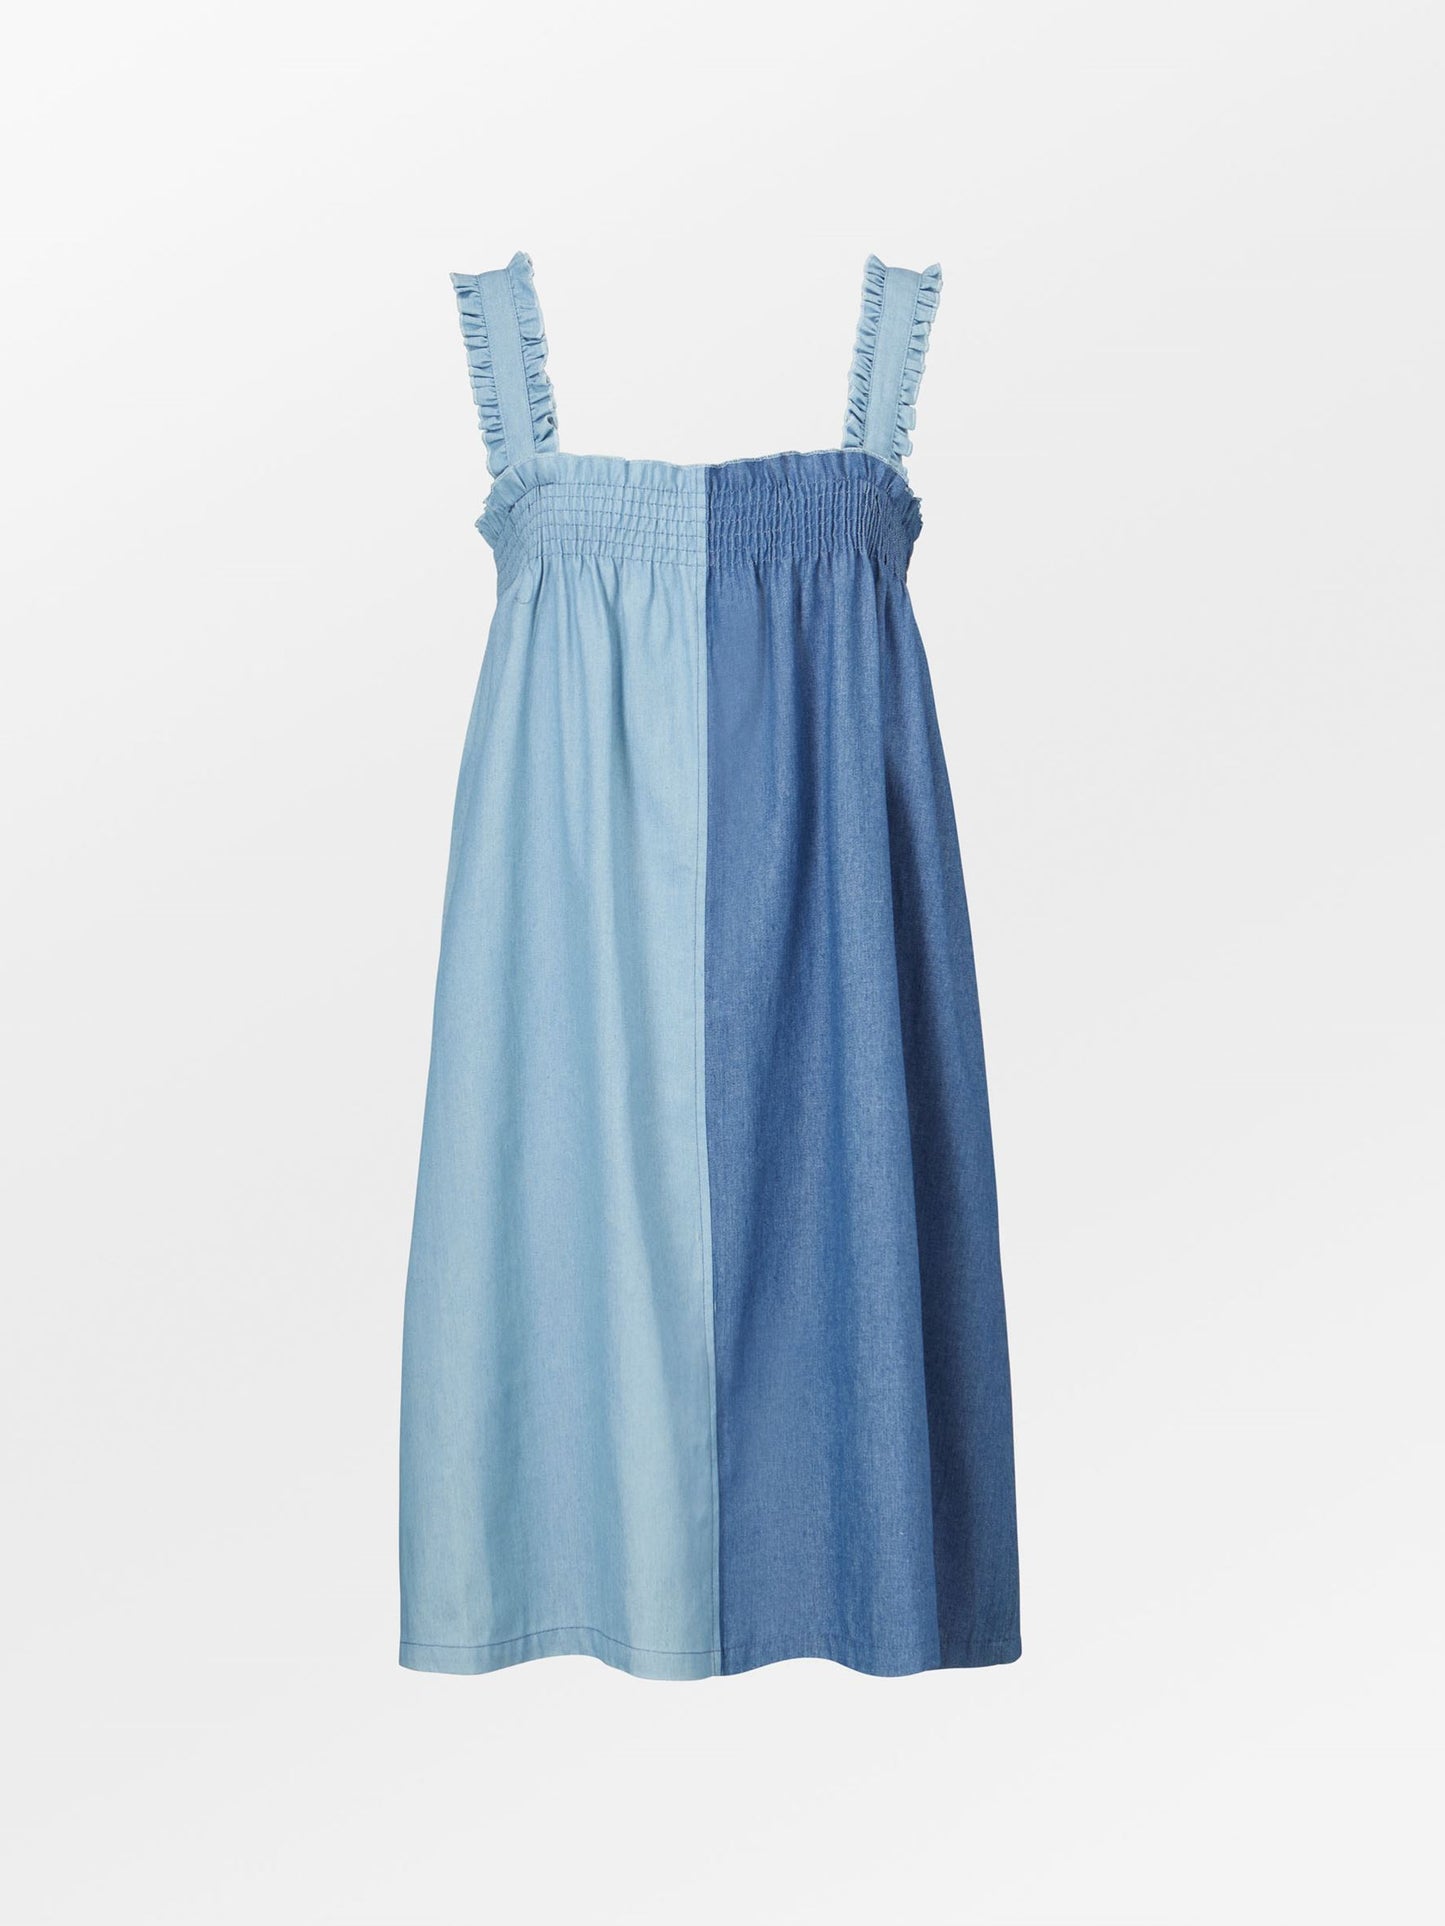 Becksöndergaard, Denia Denim Dress - Patriot Blue, archive, sale, sale, archive